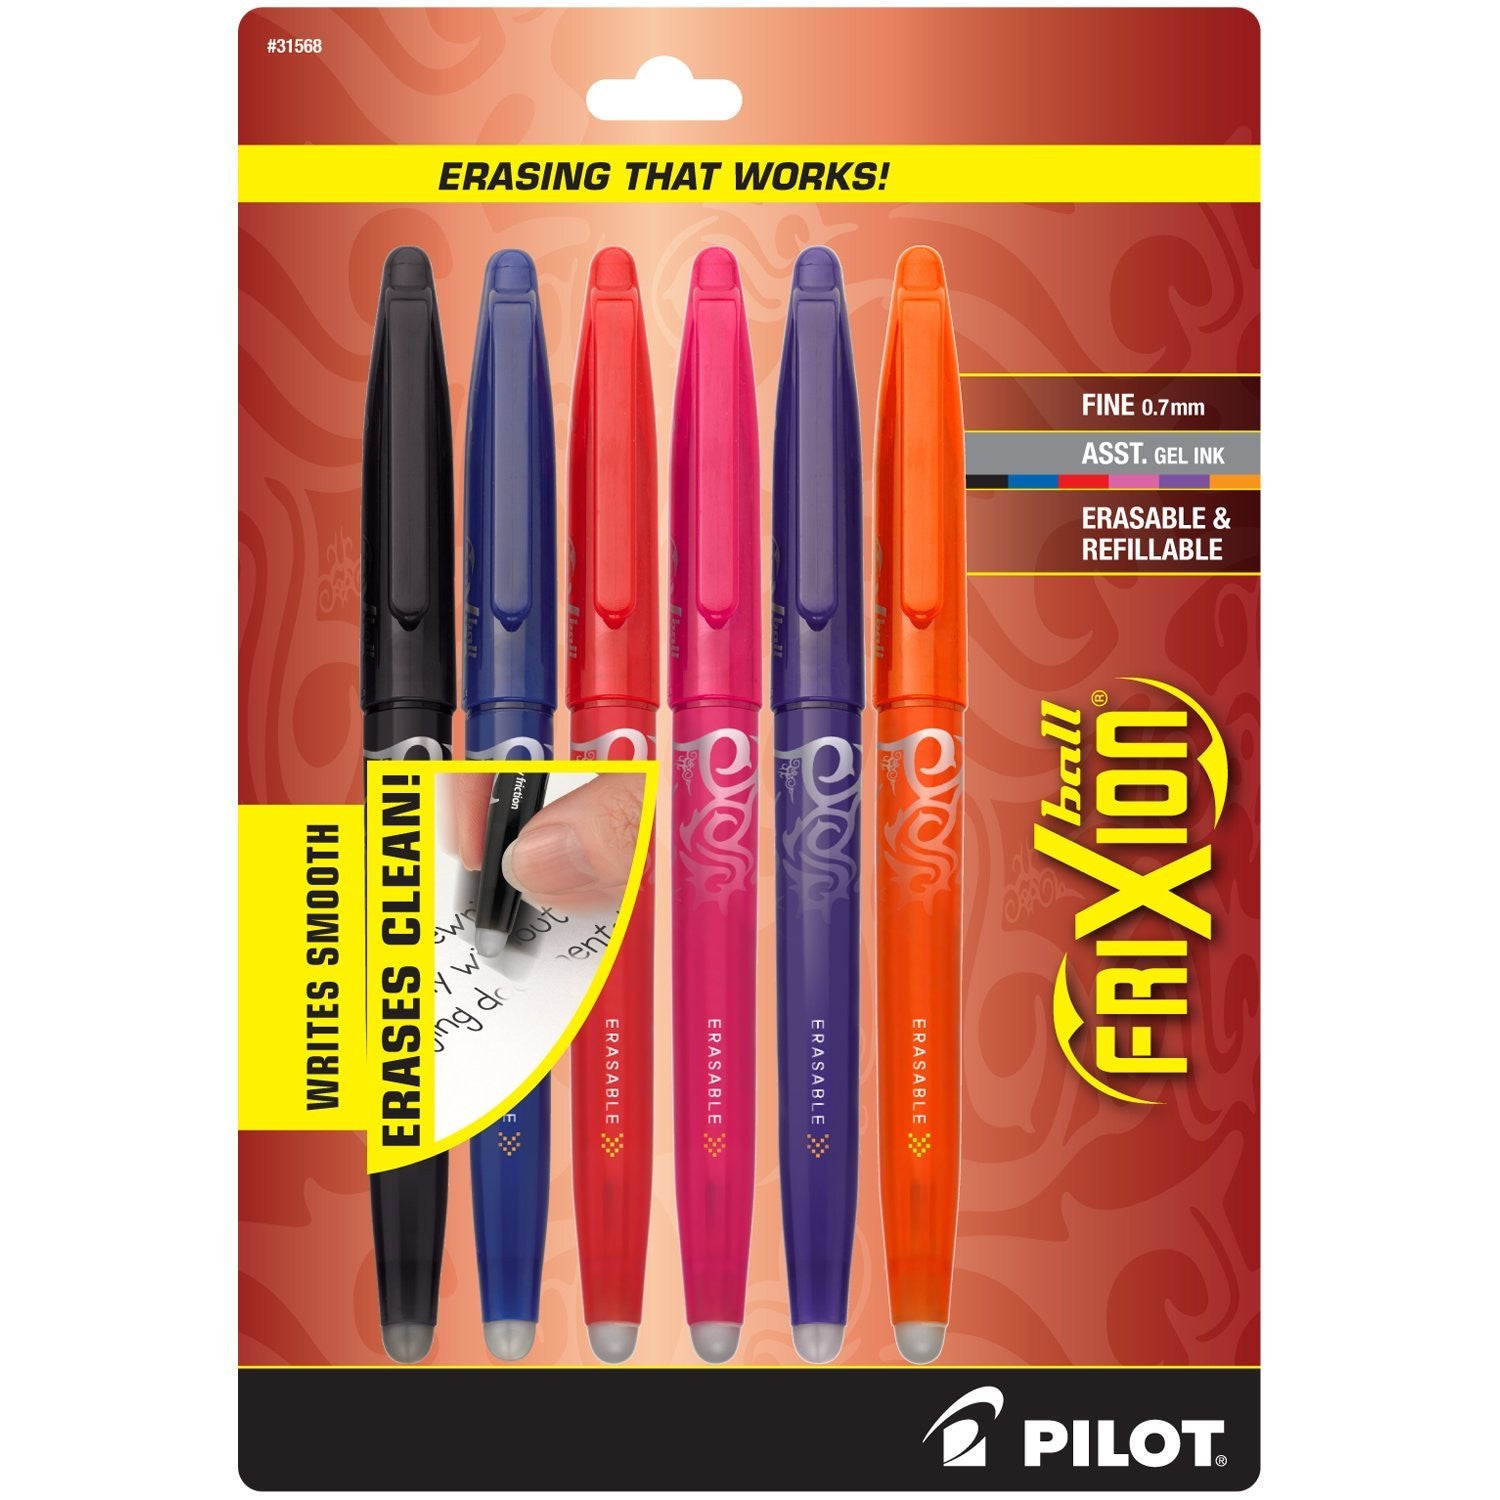 Pilot 31568 FriXion Ball Erasable Gel Pens, Fine Point, Assorted Colors 6-Pack, Black/Blue/Red/Pink/Orange/Purple